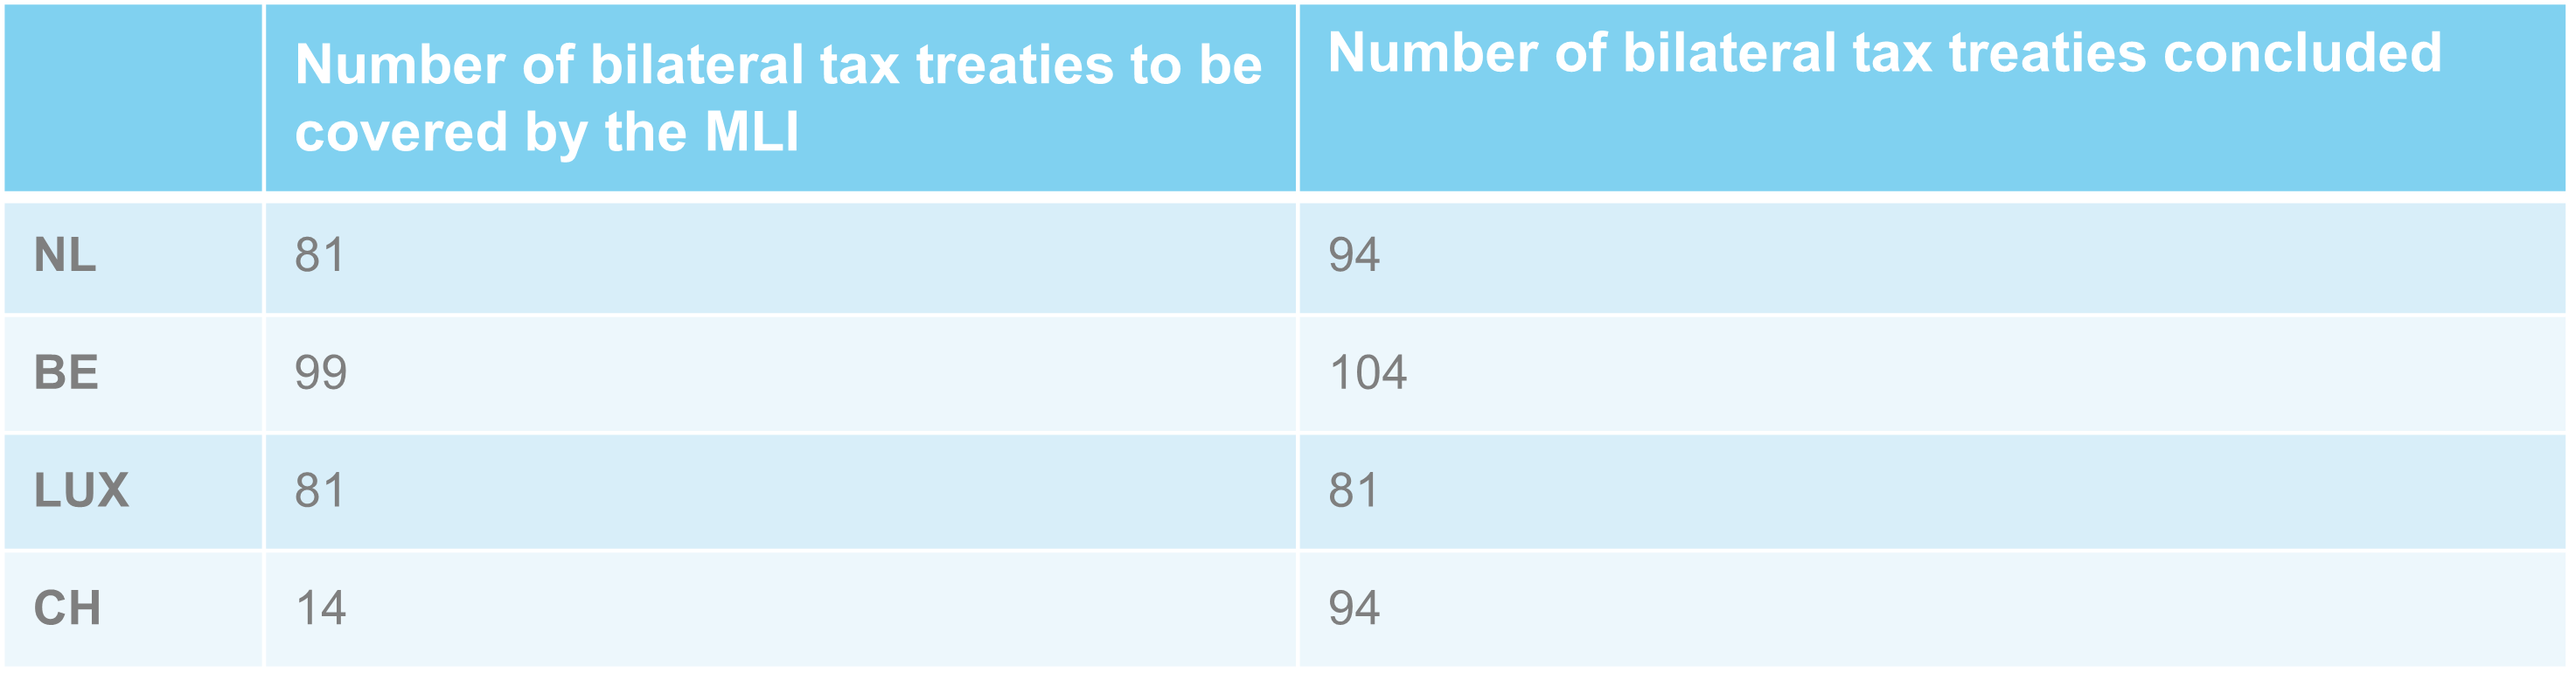 MLI Number of tax treaties.png